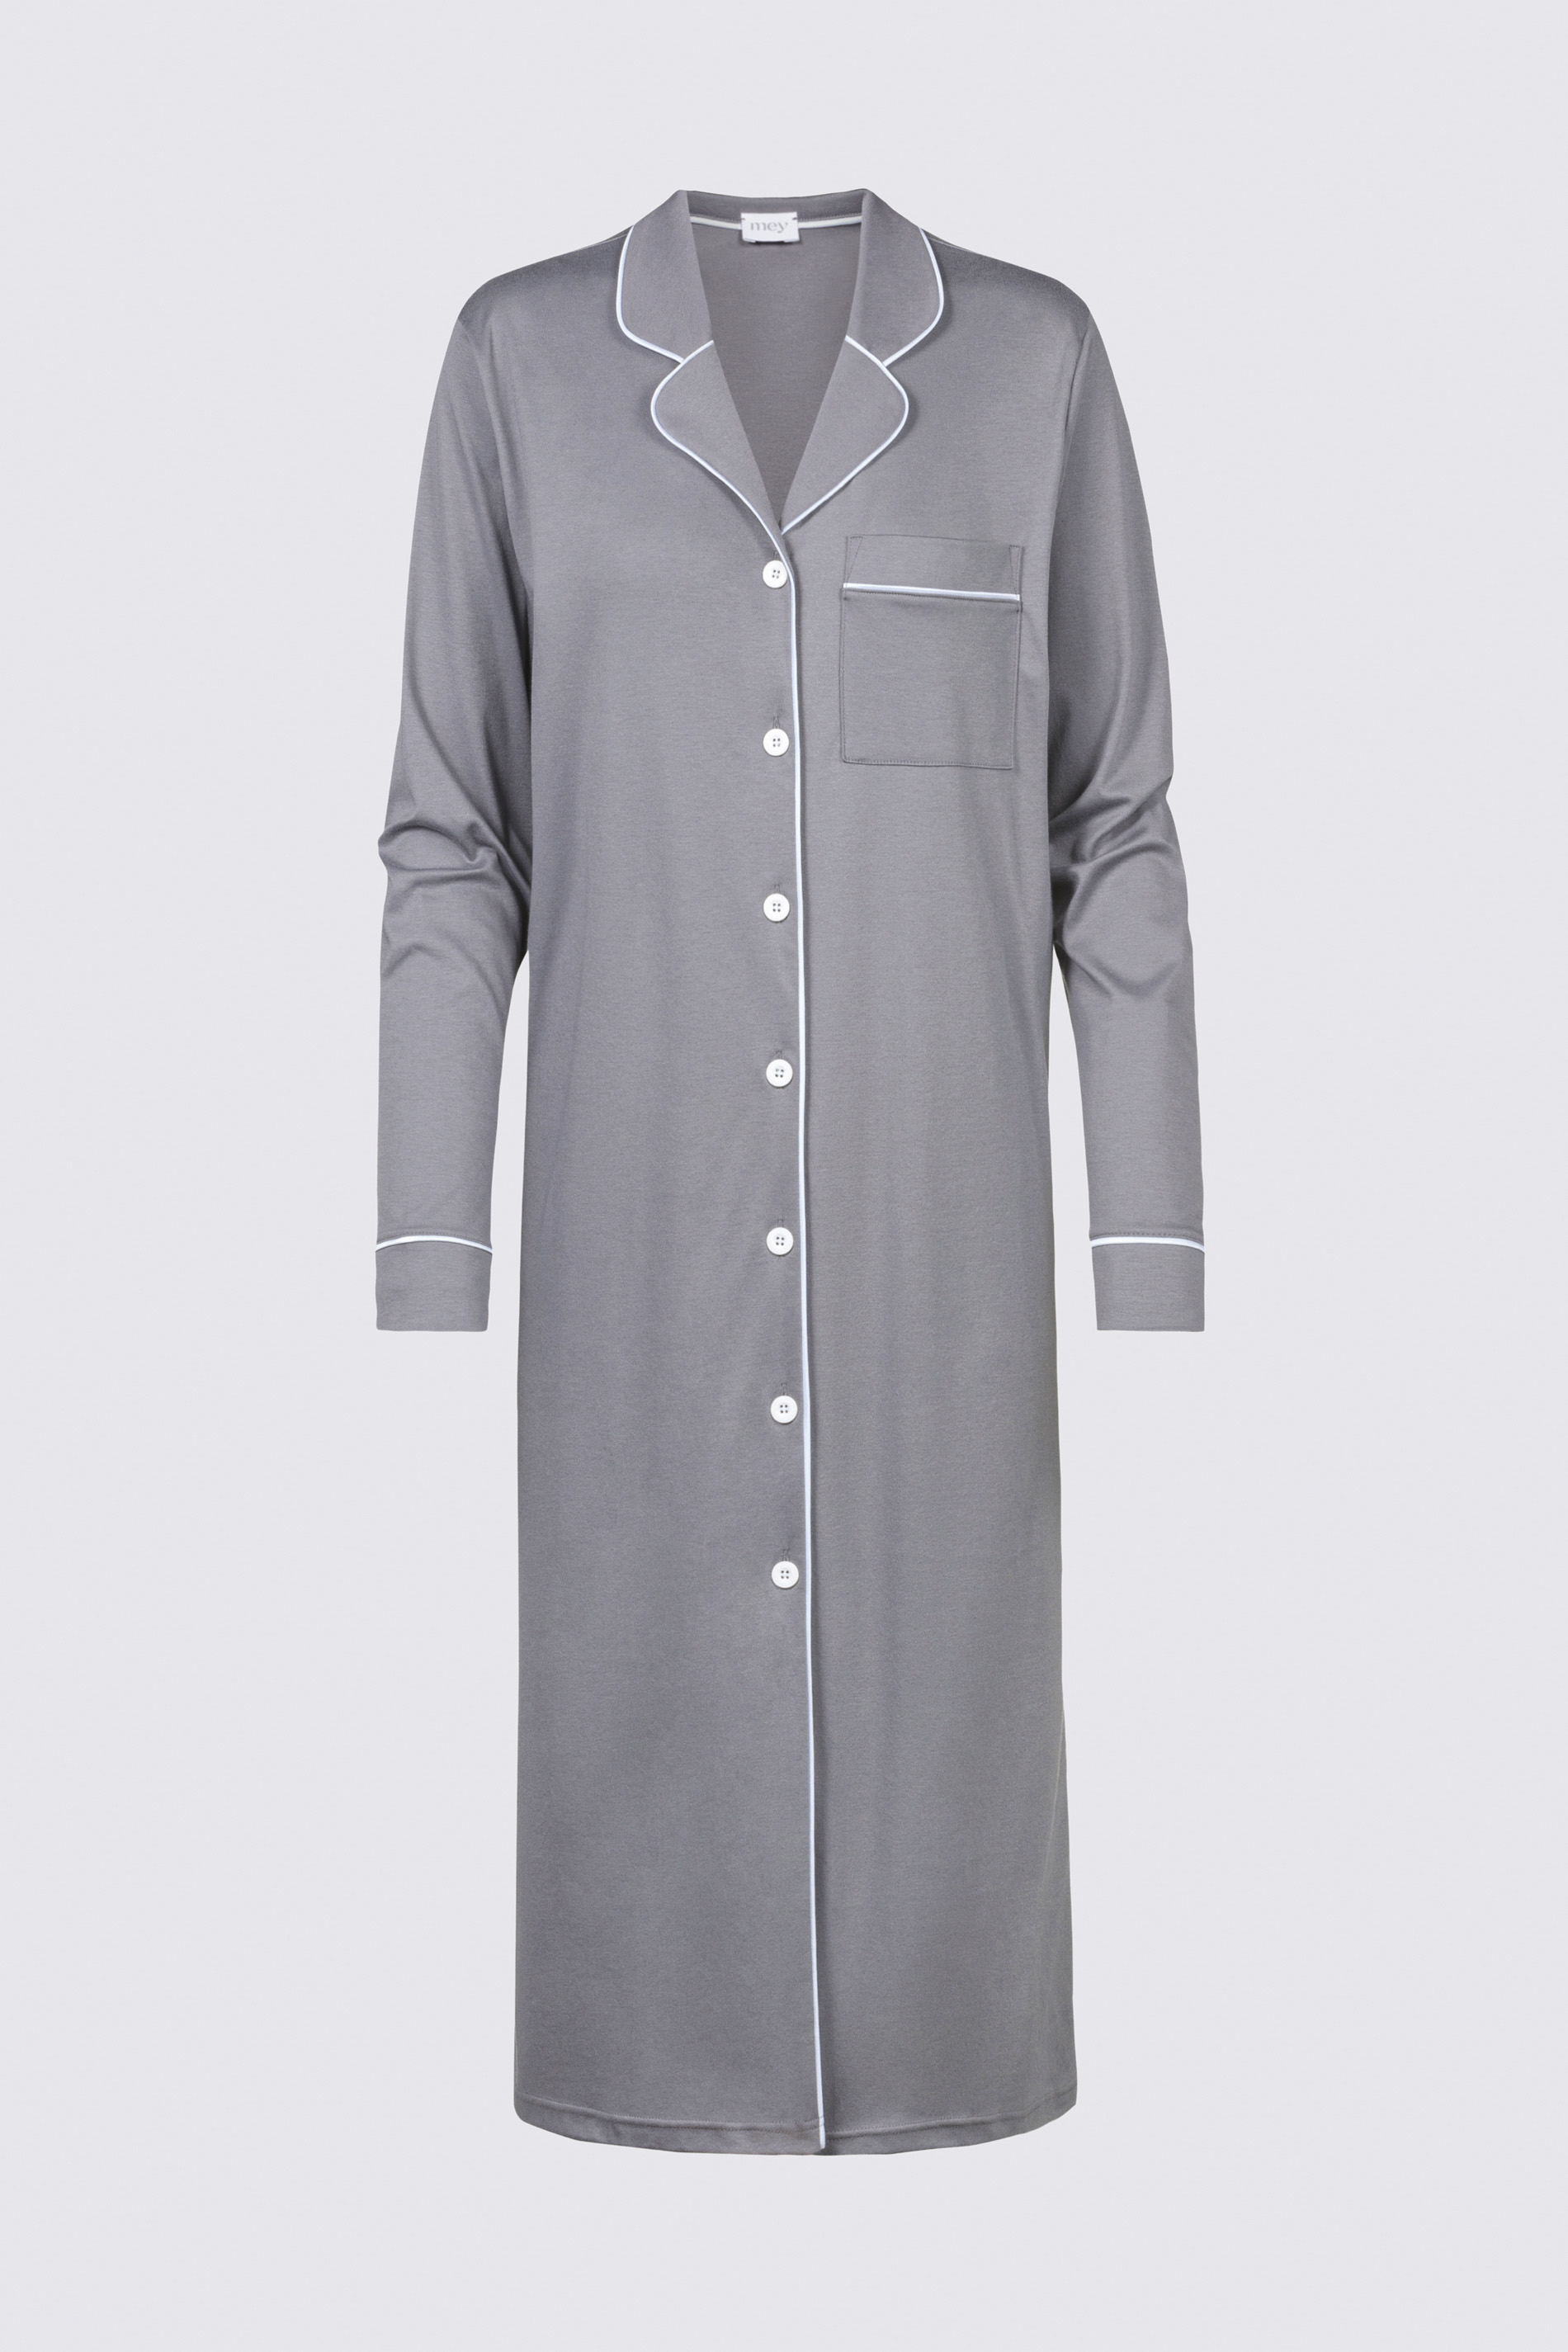 Nachthemd Lovely Grey Serie Sleepsation Uitknippen | mey®